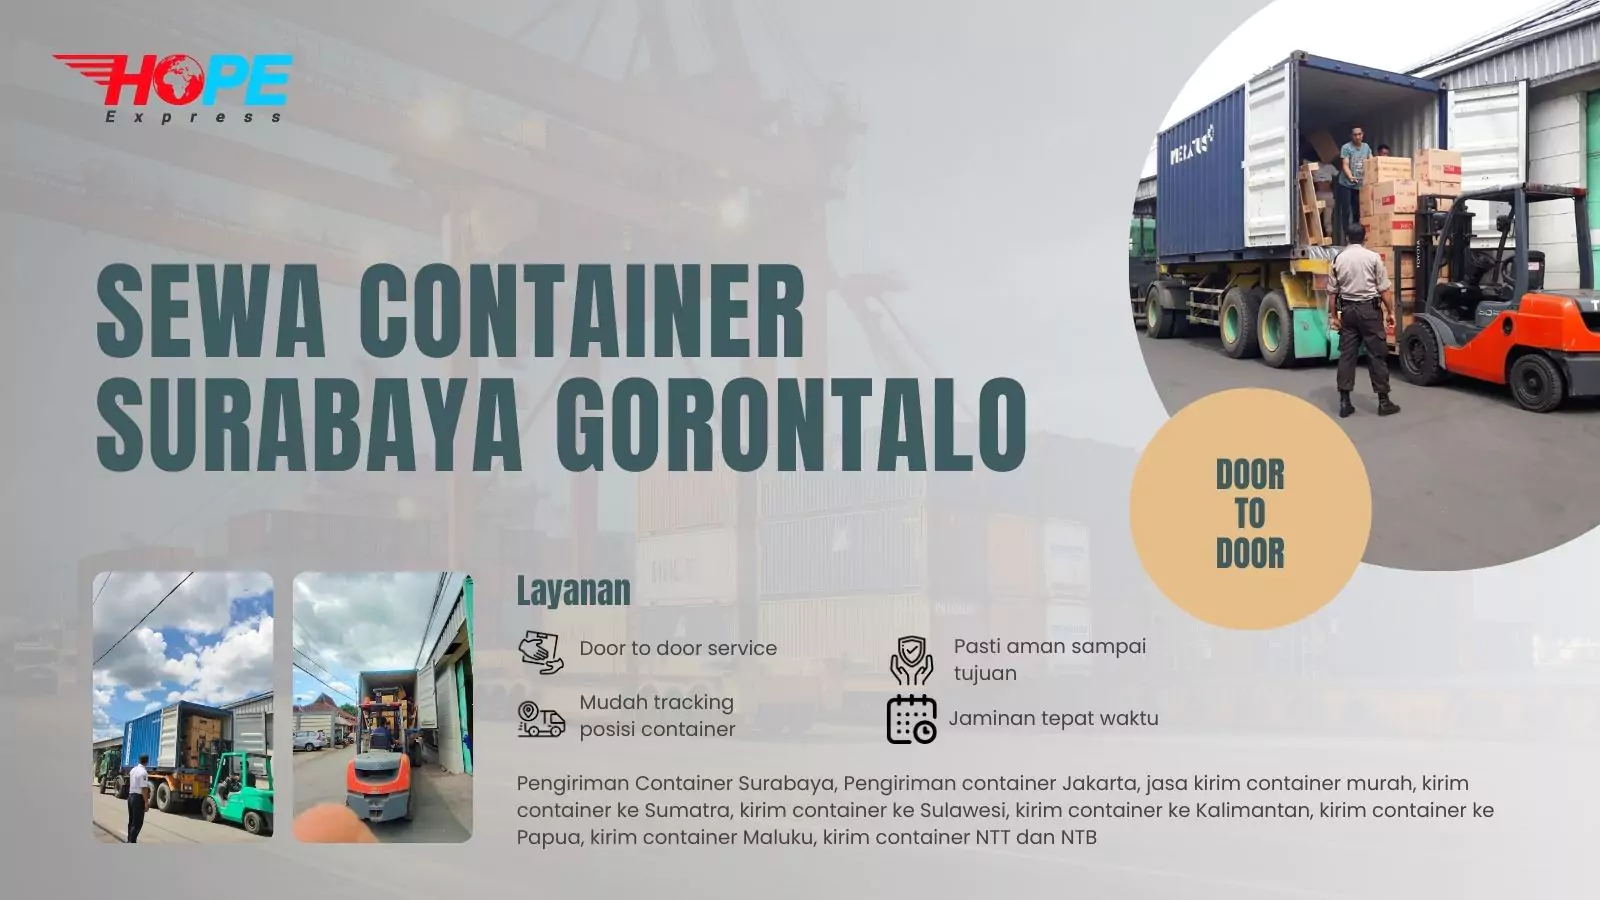 Sewa Container Surabaya Gorontalo